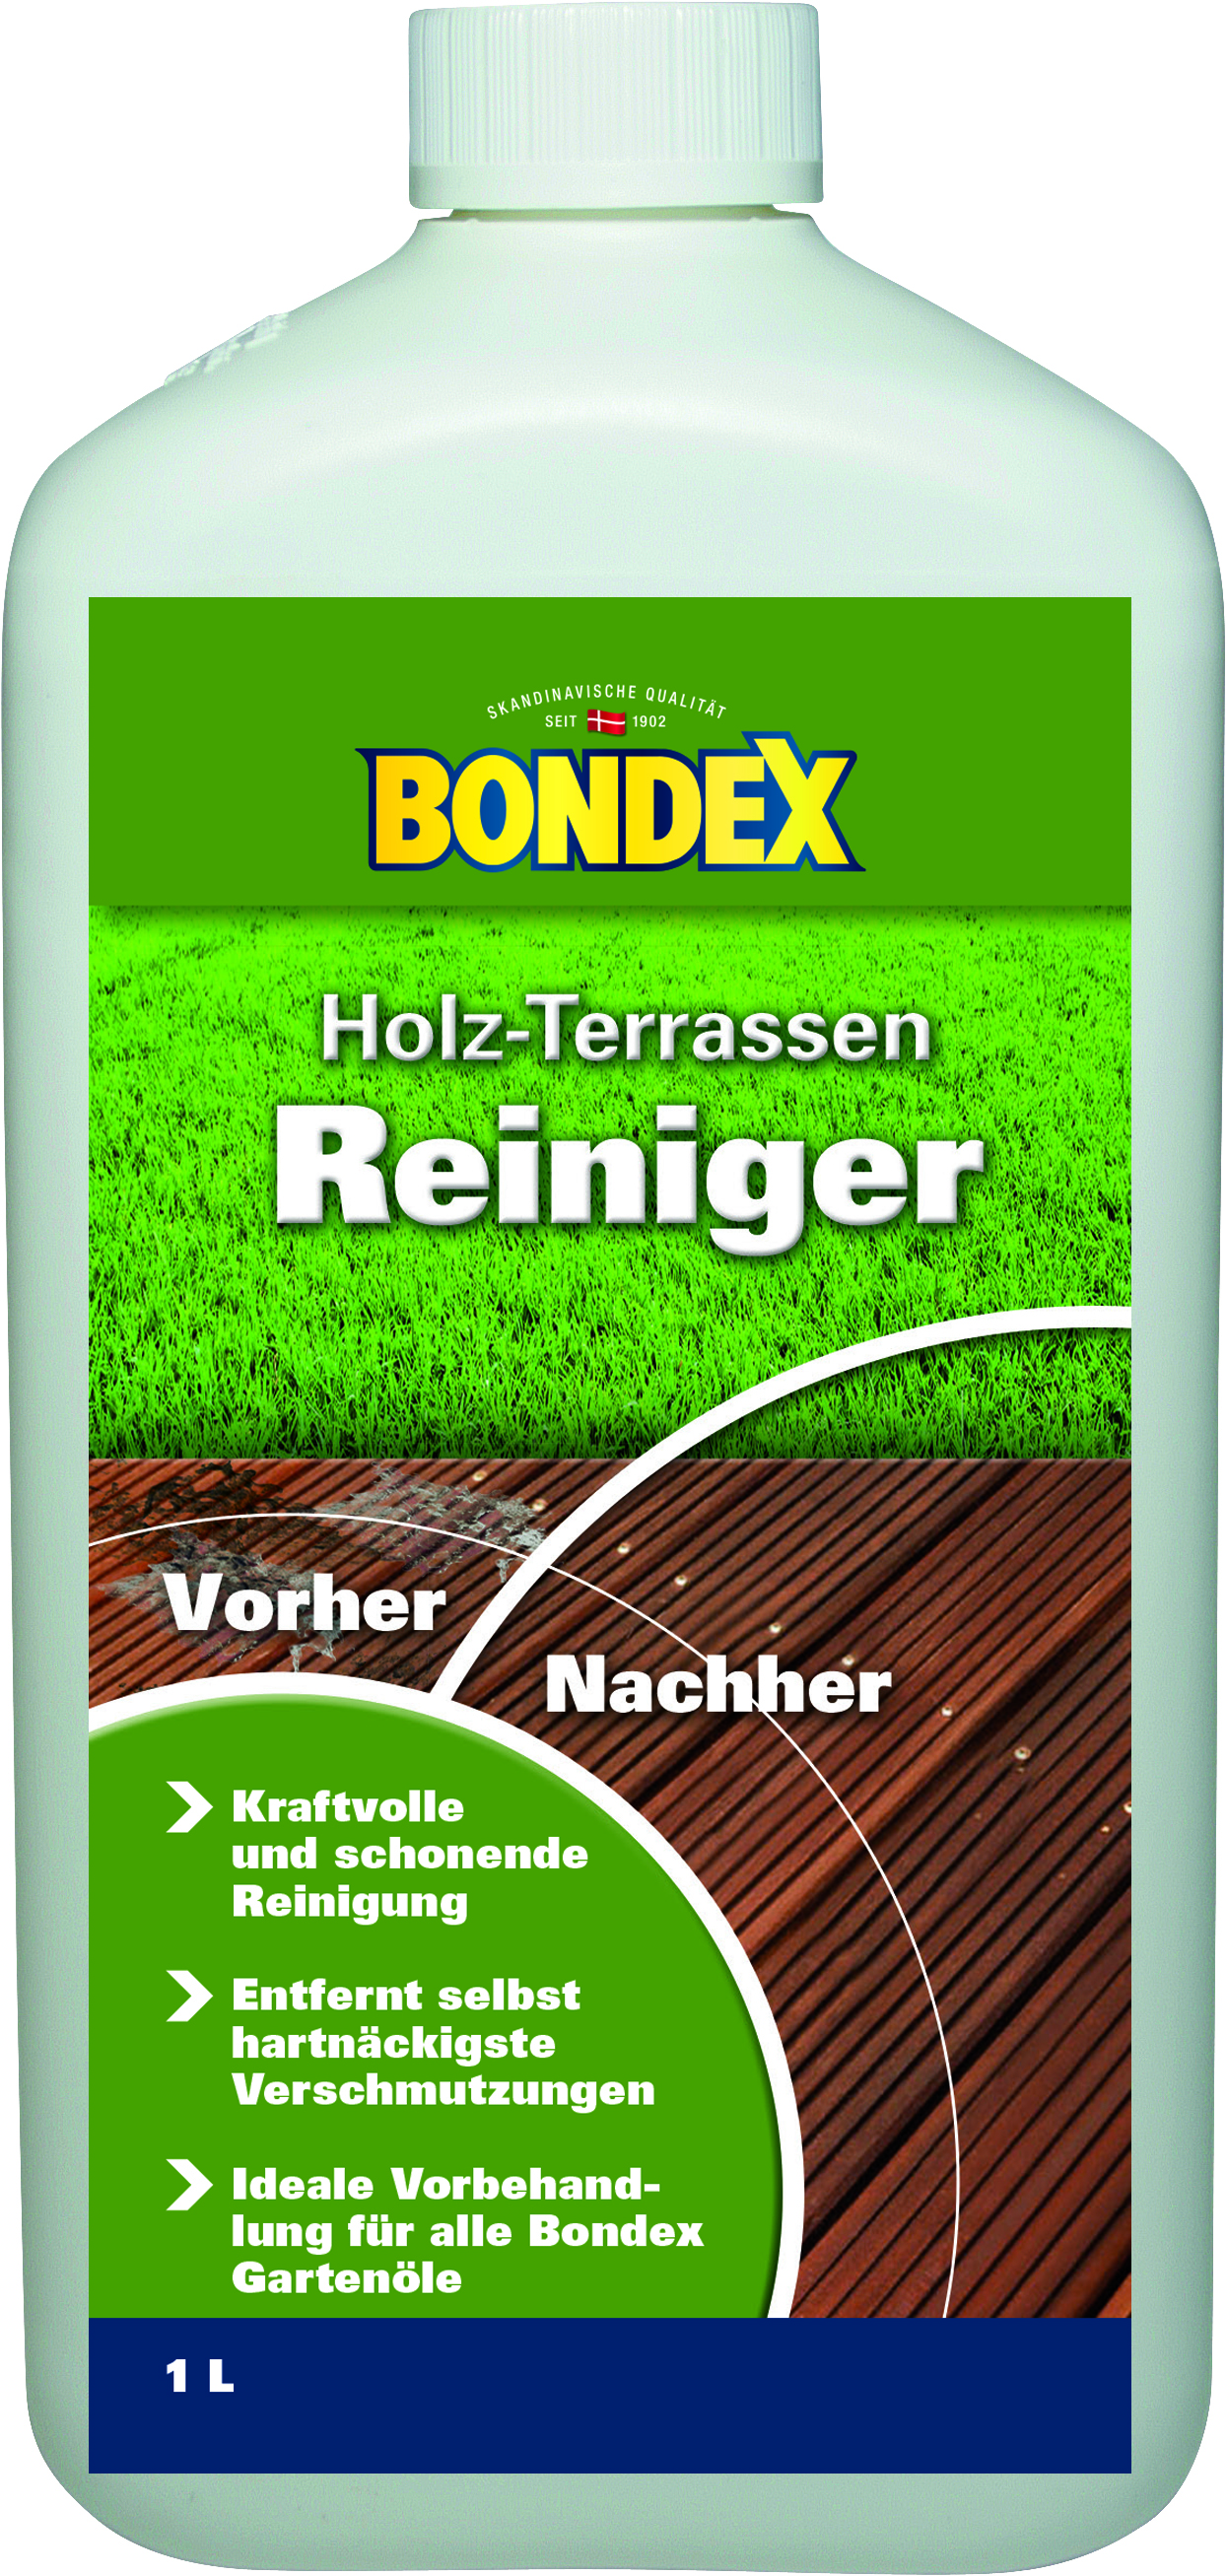 Bondex Holz-Terrassen Reiniger, 1L